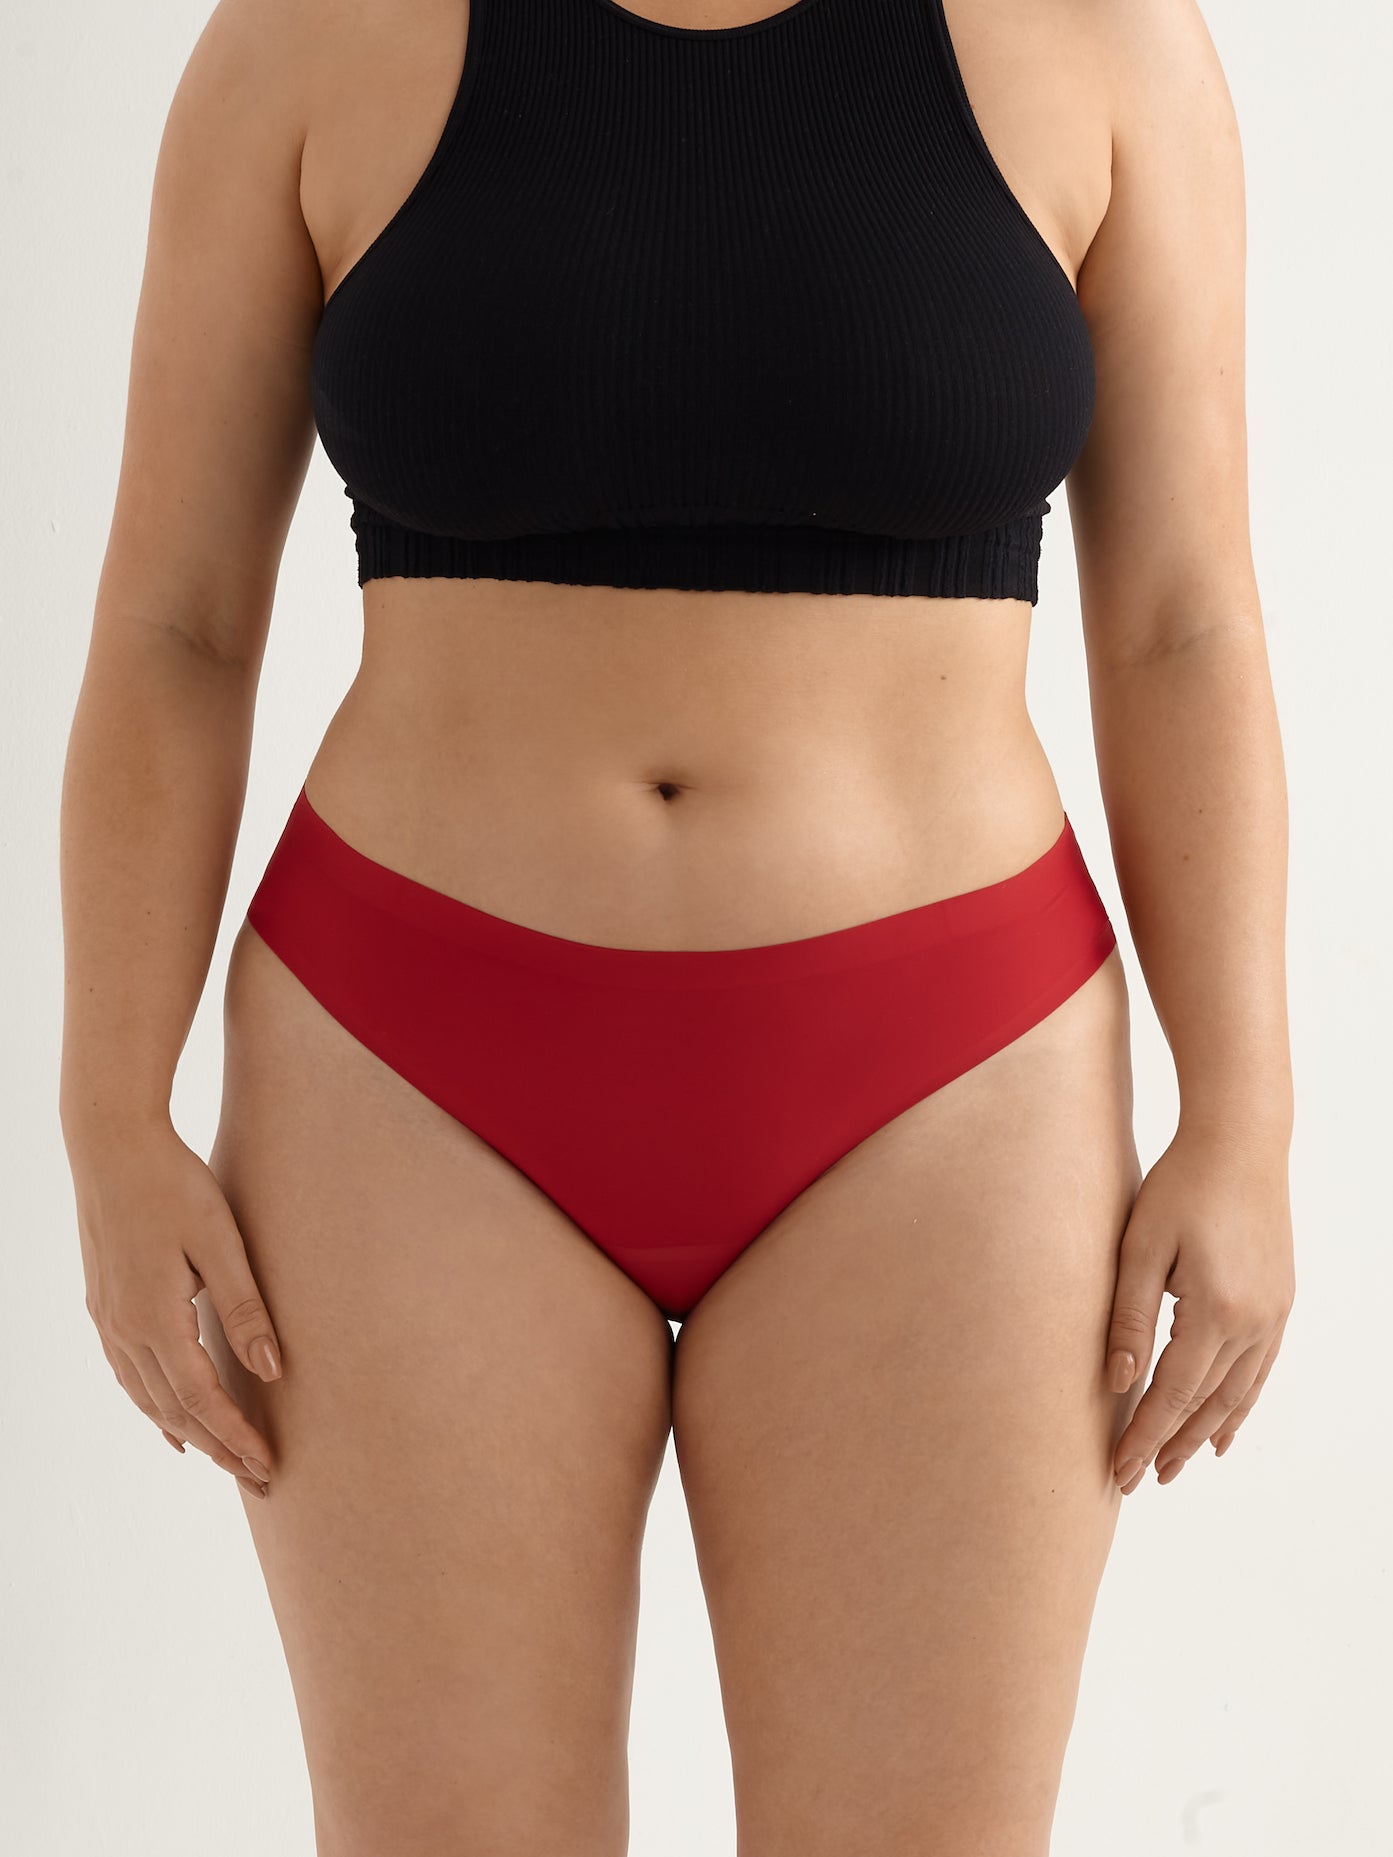 Imaara Feminine Period Underwear Inclusive Knickers. Product Jamuna Poppy